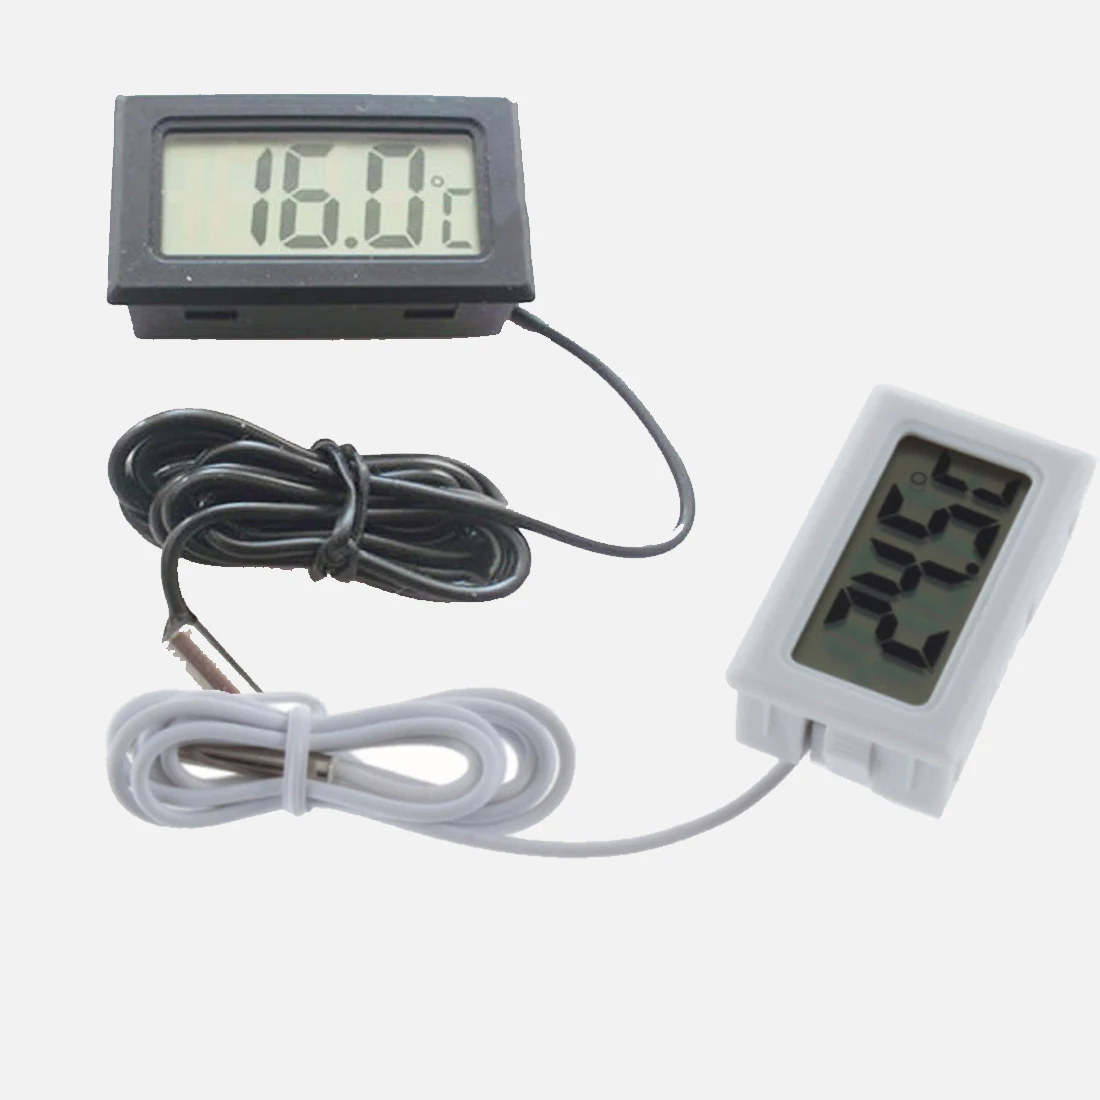 

Thermometer digital Thermograph For Aquarium Refrigerator 1 Piece Digital LCD Probe Fridge Freezer Thermometer( -50C~110C )